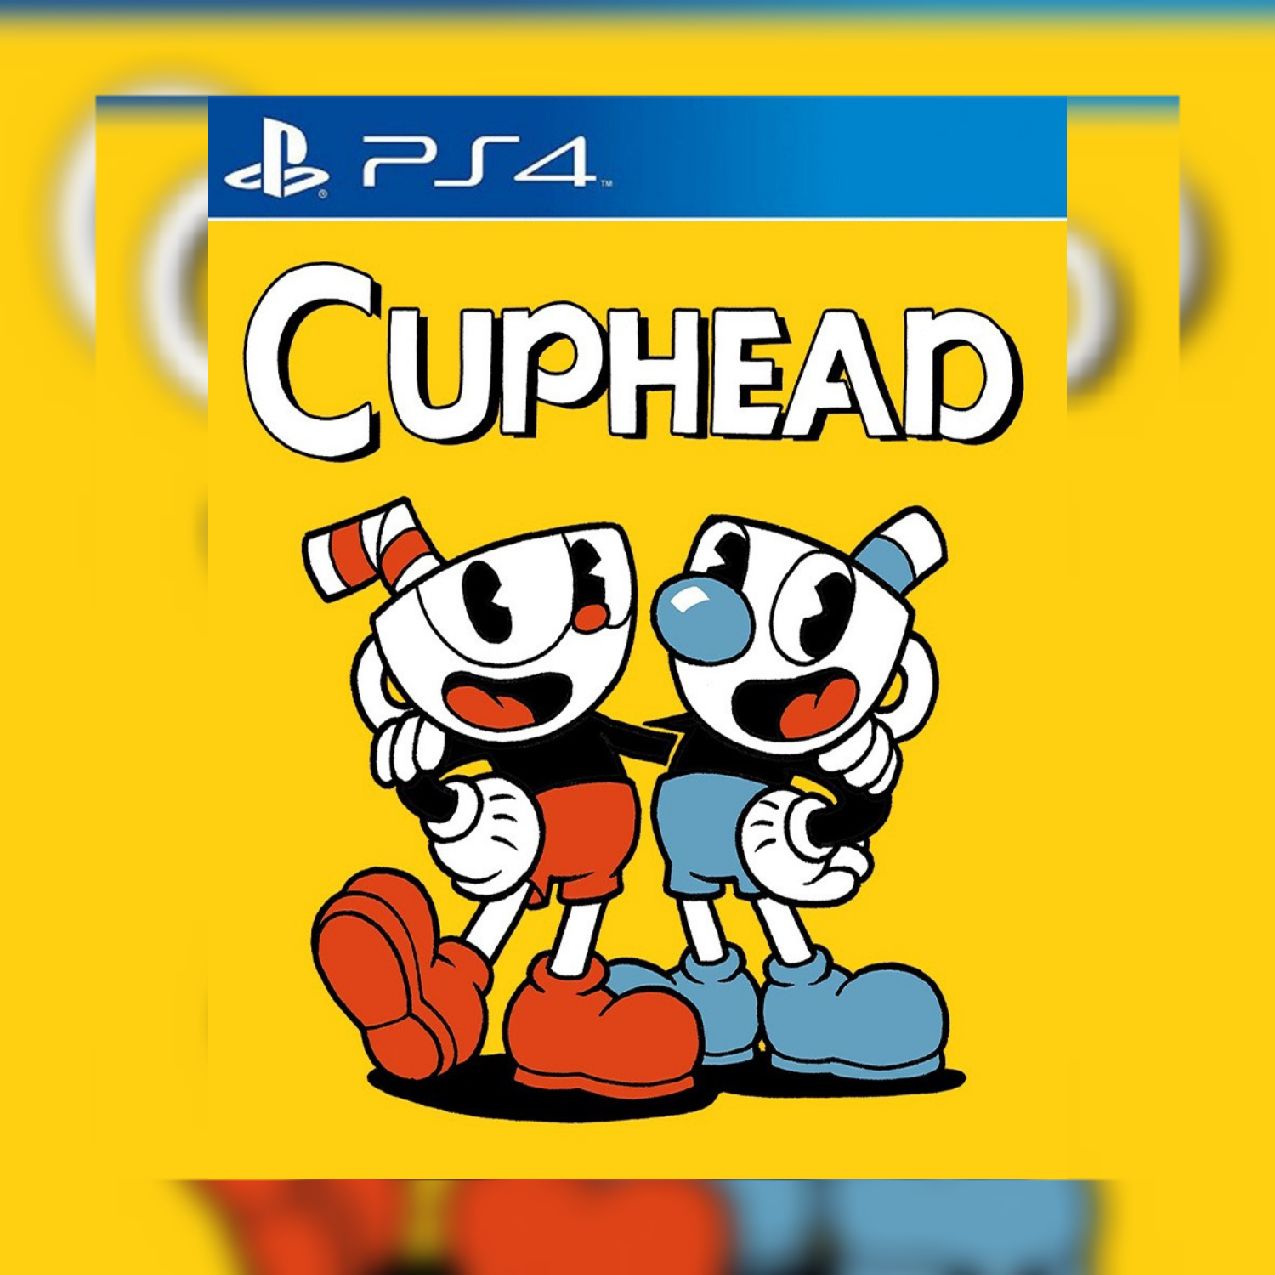 Jogue Corrida cuphead gratuitamente sem downloads